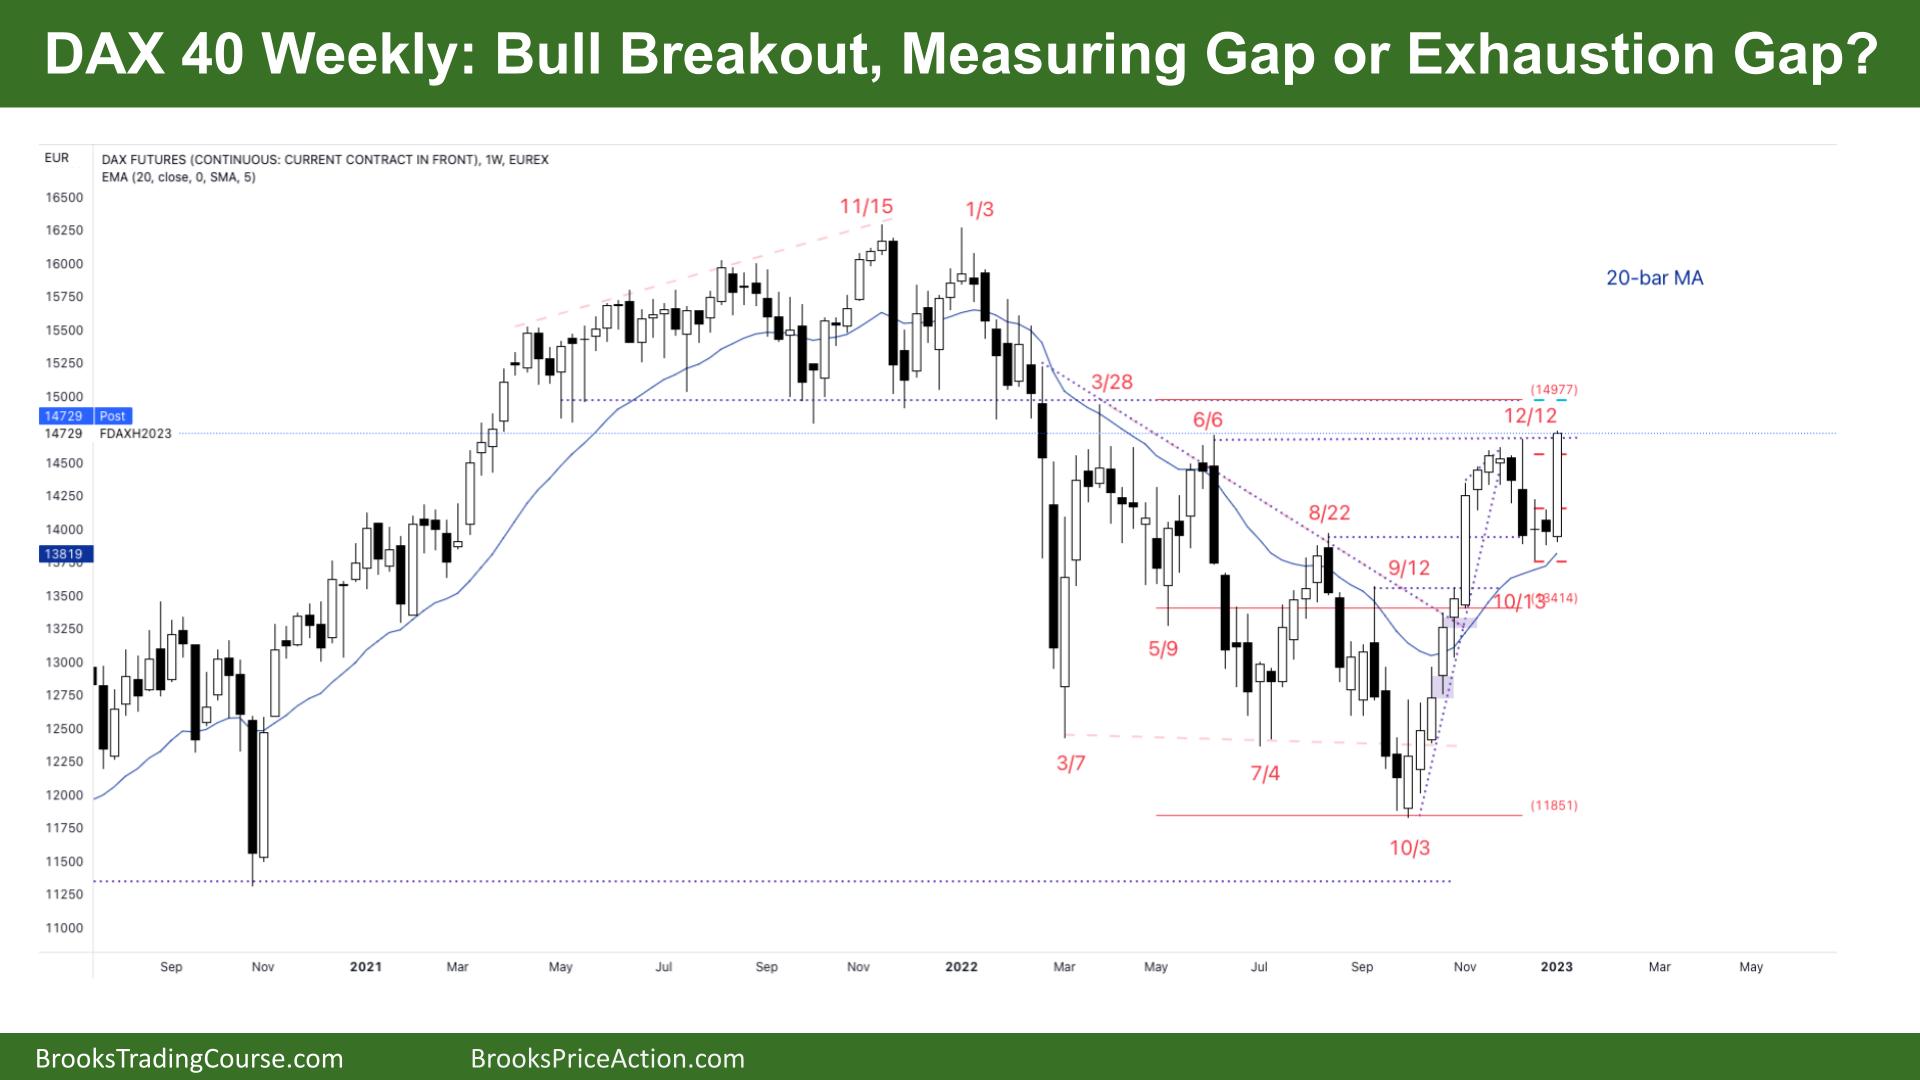 DAX 40 Big Bull Breakout, Measuring Gap or Exhaustion Gap